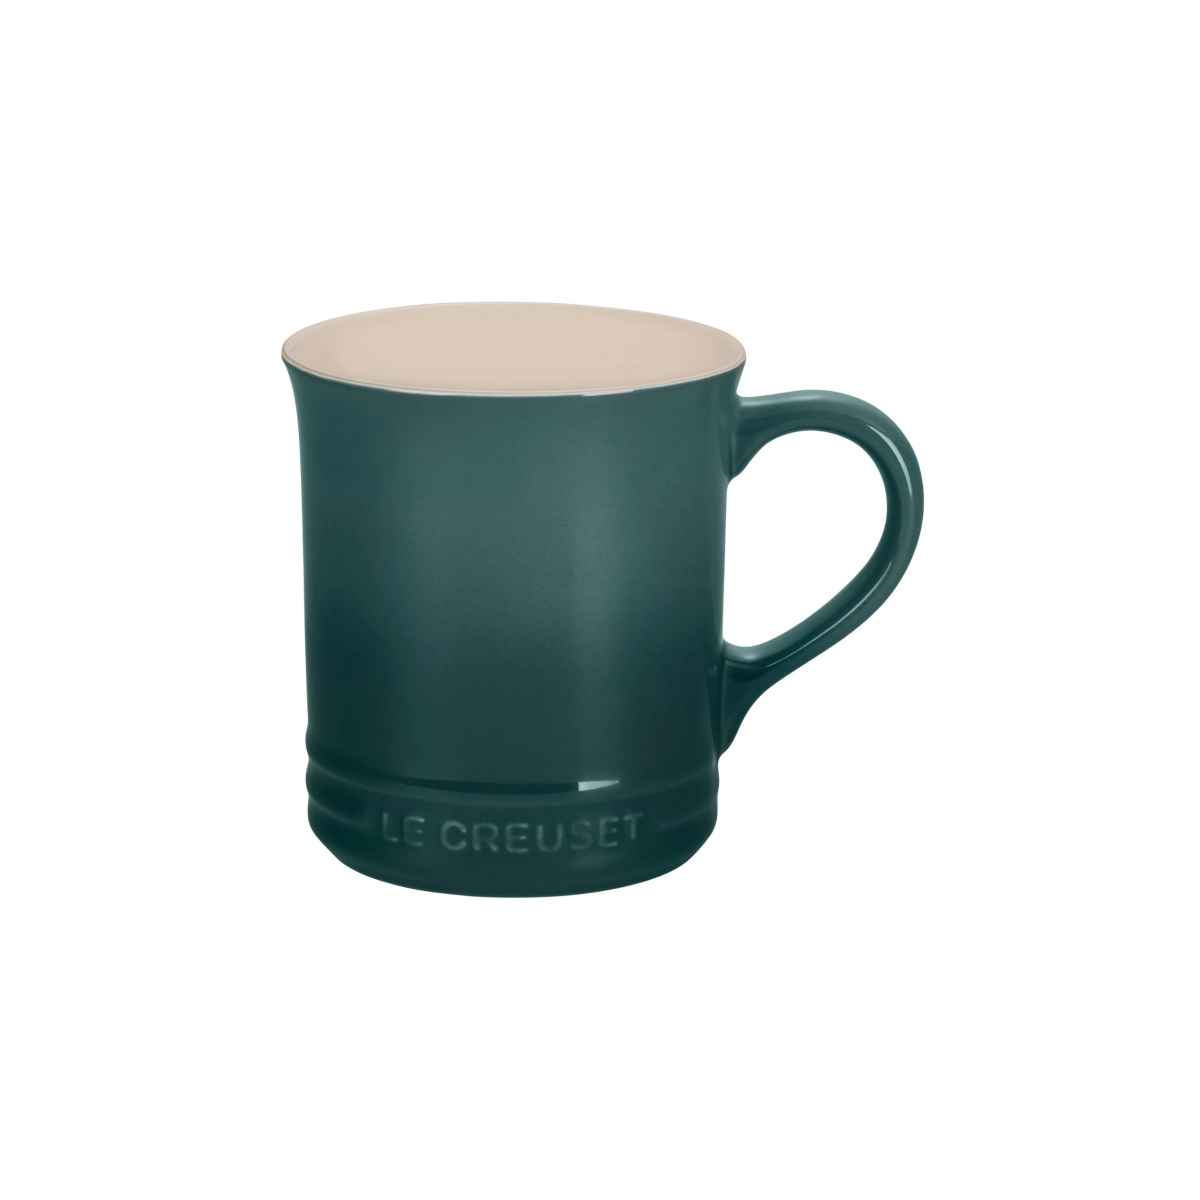 Le Creuset Coffee Mug